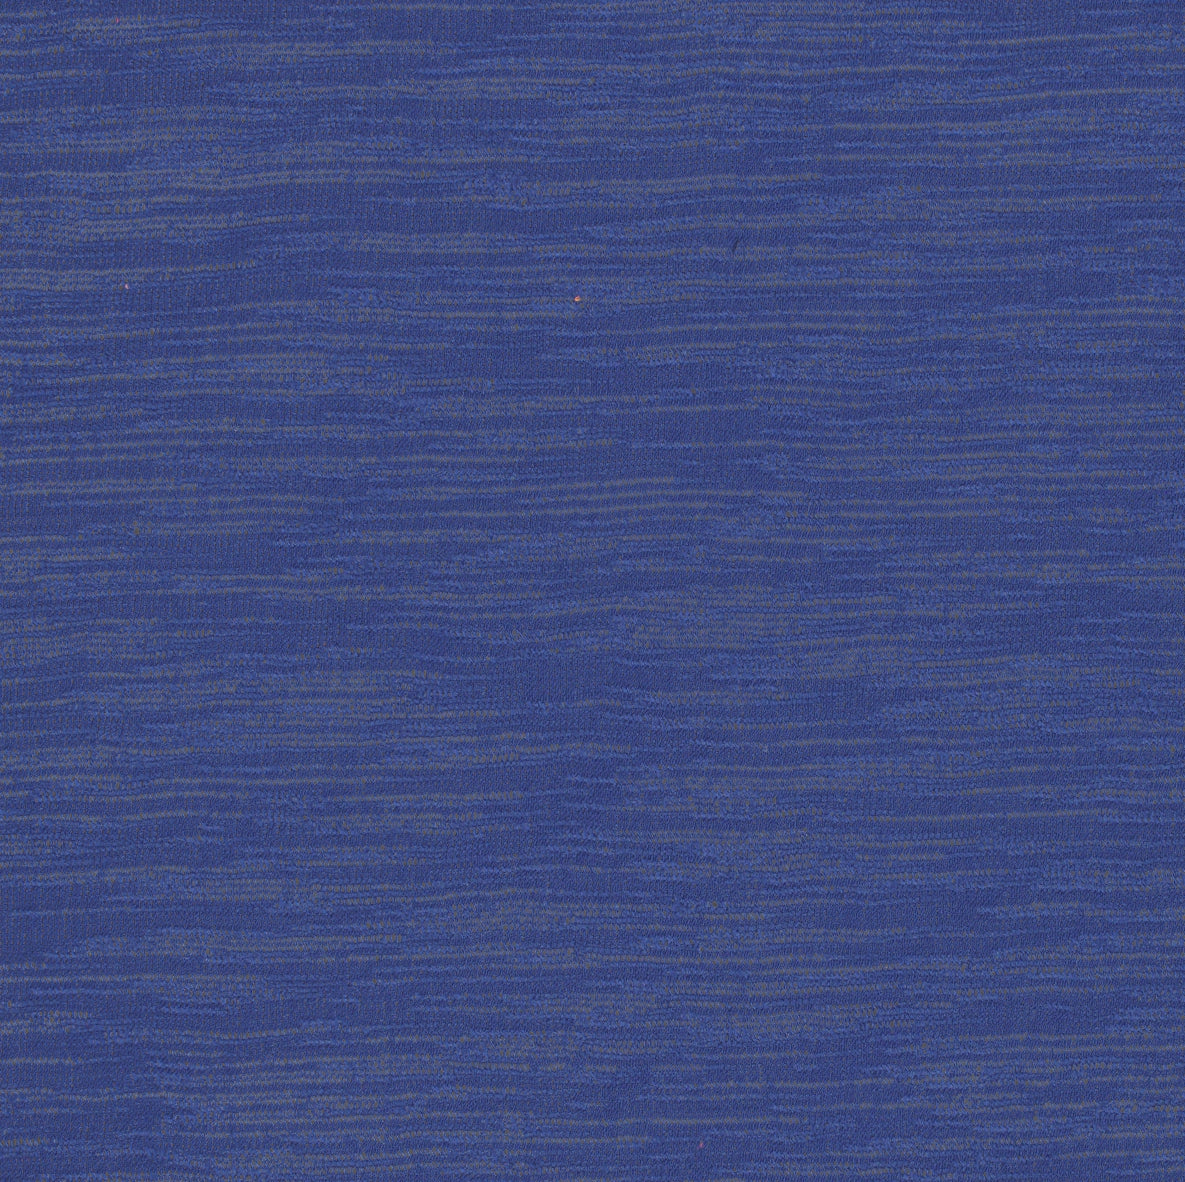 15011-08 Violet Blue Polyester Plain Dyed 100% 58" 95g/yd blue knit plain dyed polyester Solid Color - knit fabric - woven fabric - fabric company - fabric wholesale - fabric b2b - fabric factory - high quality fabric - hong kong fabric - fabric hk - acetate fabric - cotton fabric - linen fabric - metallic fabric - nylon fabric - polyester fabric - spandex fabric - chun wing hing - cwh hk - fabric worldwide ship - 針織布 - 梳織布 - 布料公司- 布料批發 - 香港布料 - 秦榮興